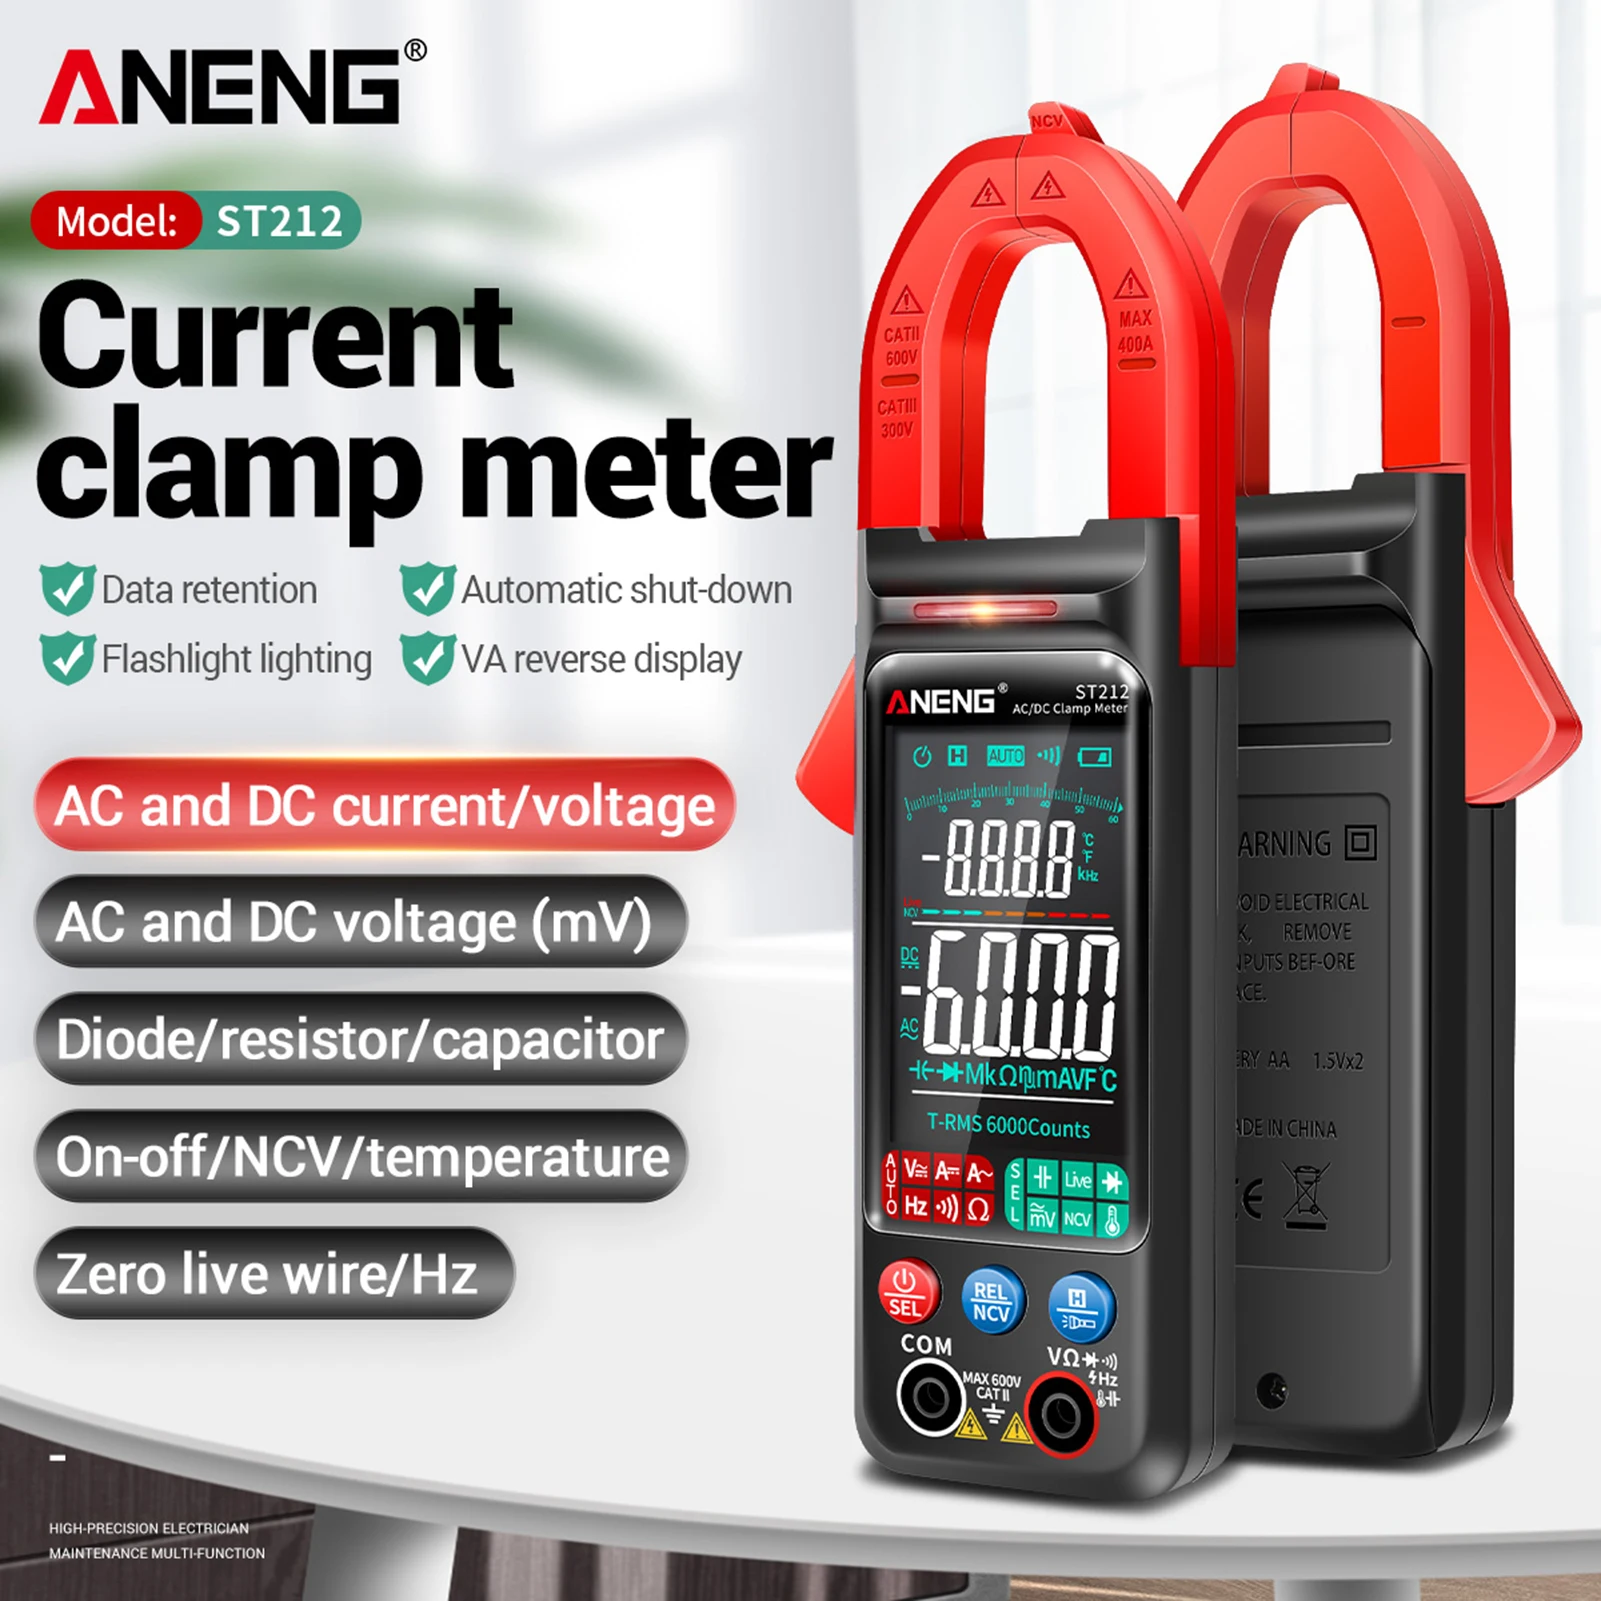 

ANENG ST212 Clamp Meter Intelligent Digital Clamp Multimeter 6000 Counts Smart AC & DC Voltmeter 400A Ammeter VA Colored Display